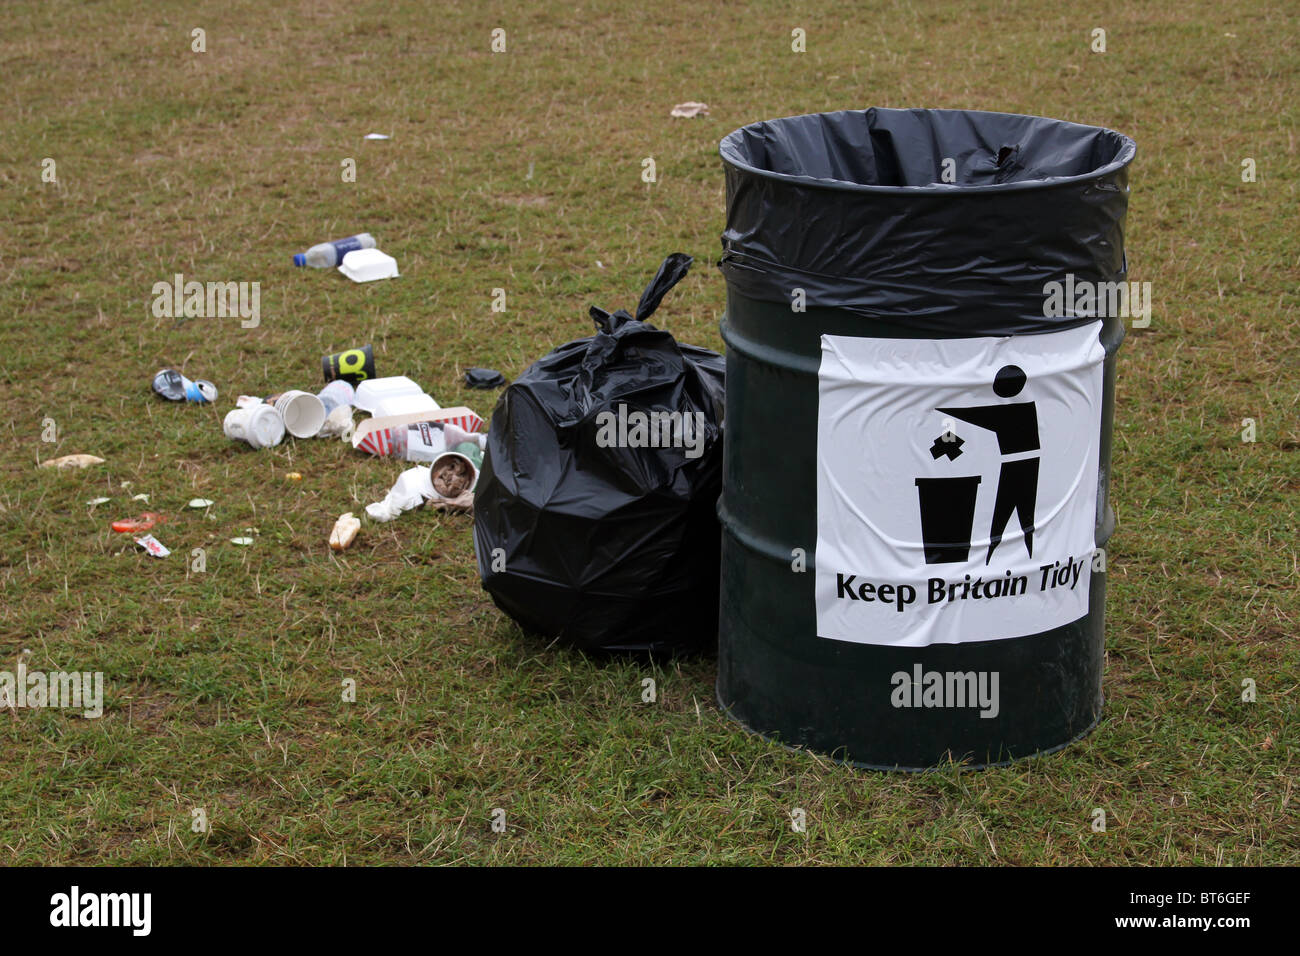 Rubbish bin by Tony Rusecki Stock Photo